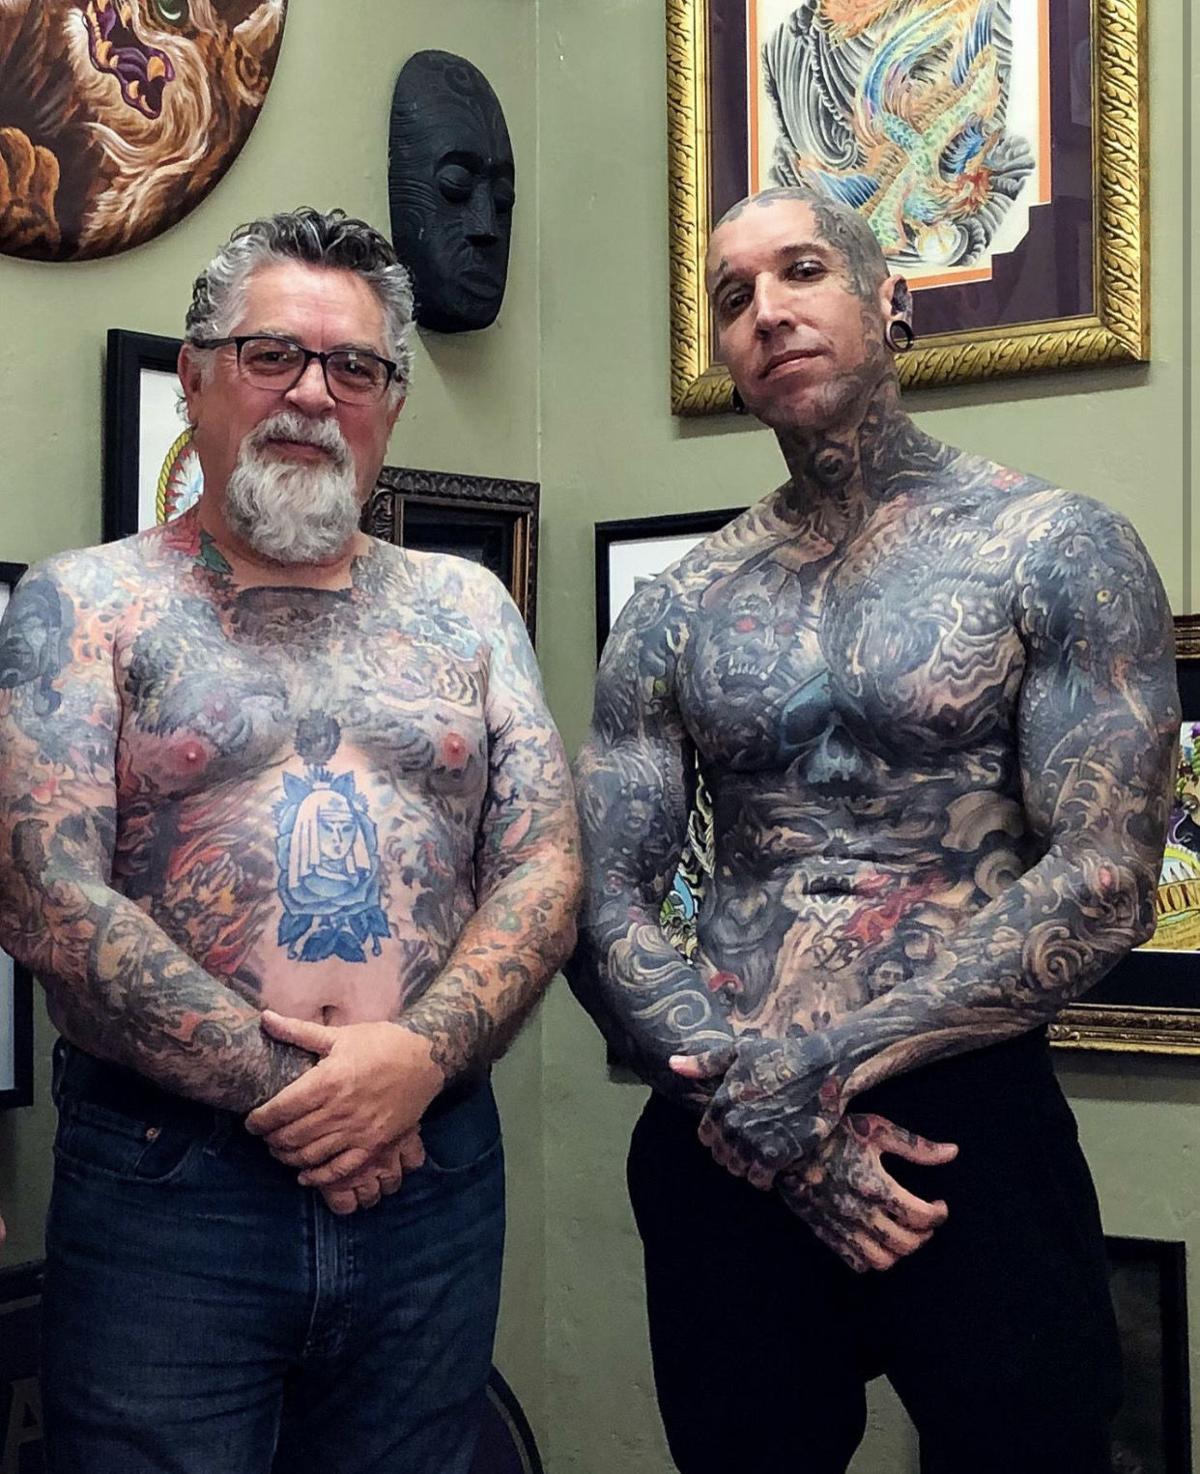 Skin Art Yallzee To Guest Judge At Star City Tattoo Lifestyle Elpasoinc Com